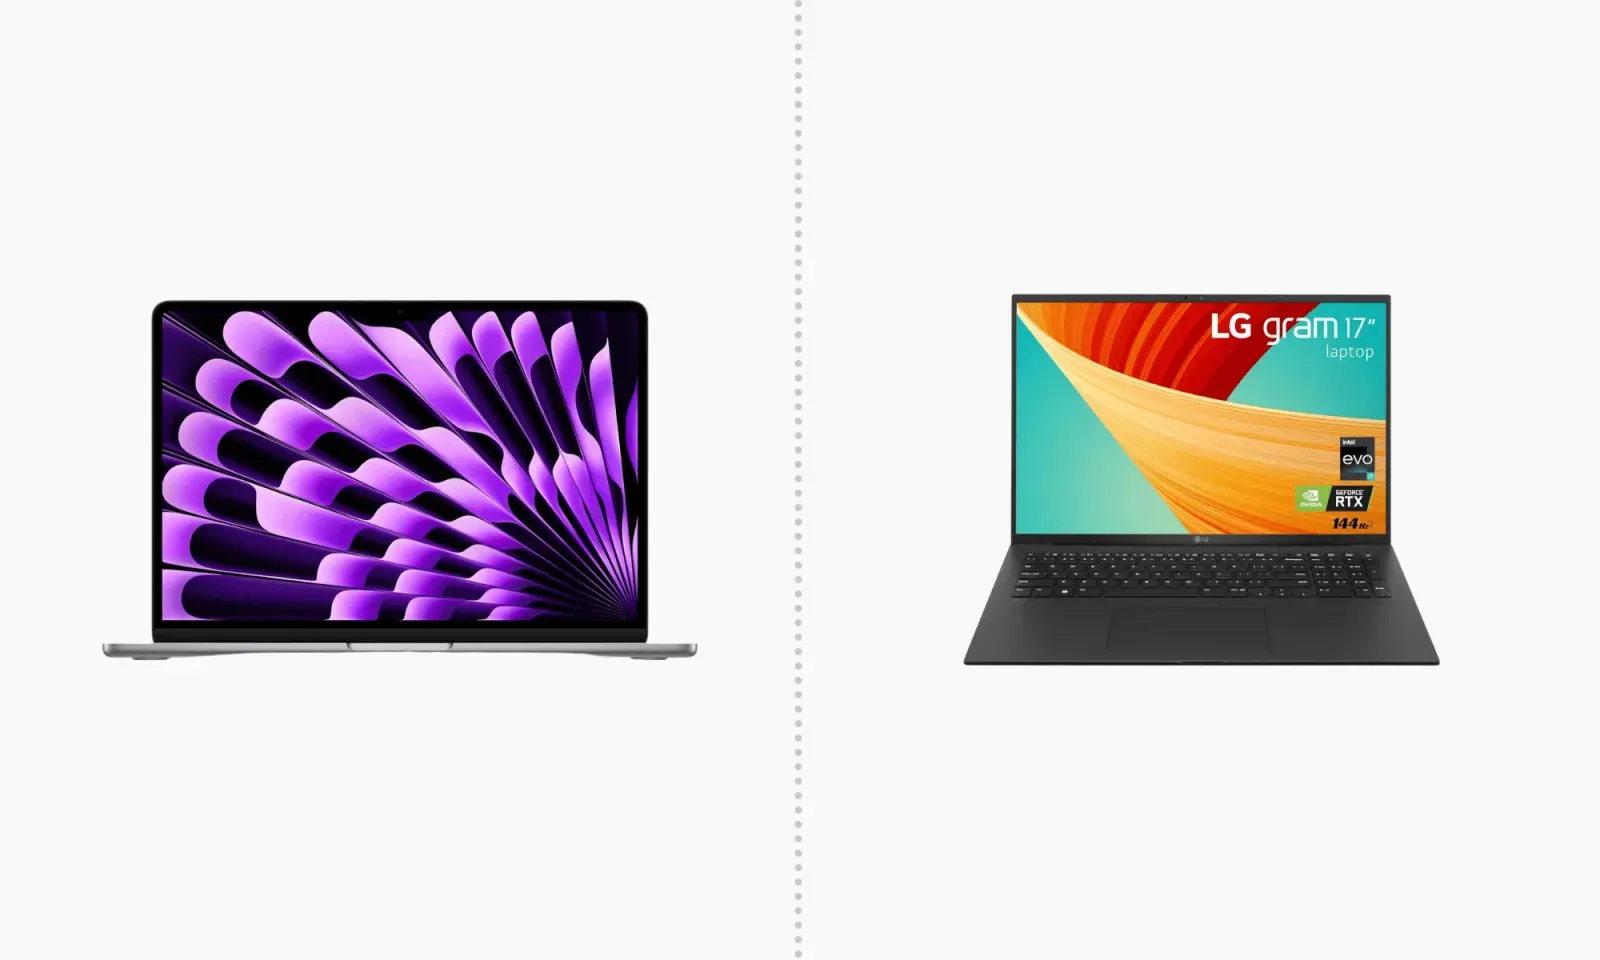 Il pc portatile Macbook Air 13 pollici a sinistra ed il notebook LG Gram 17 a destra